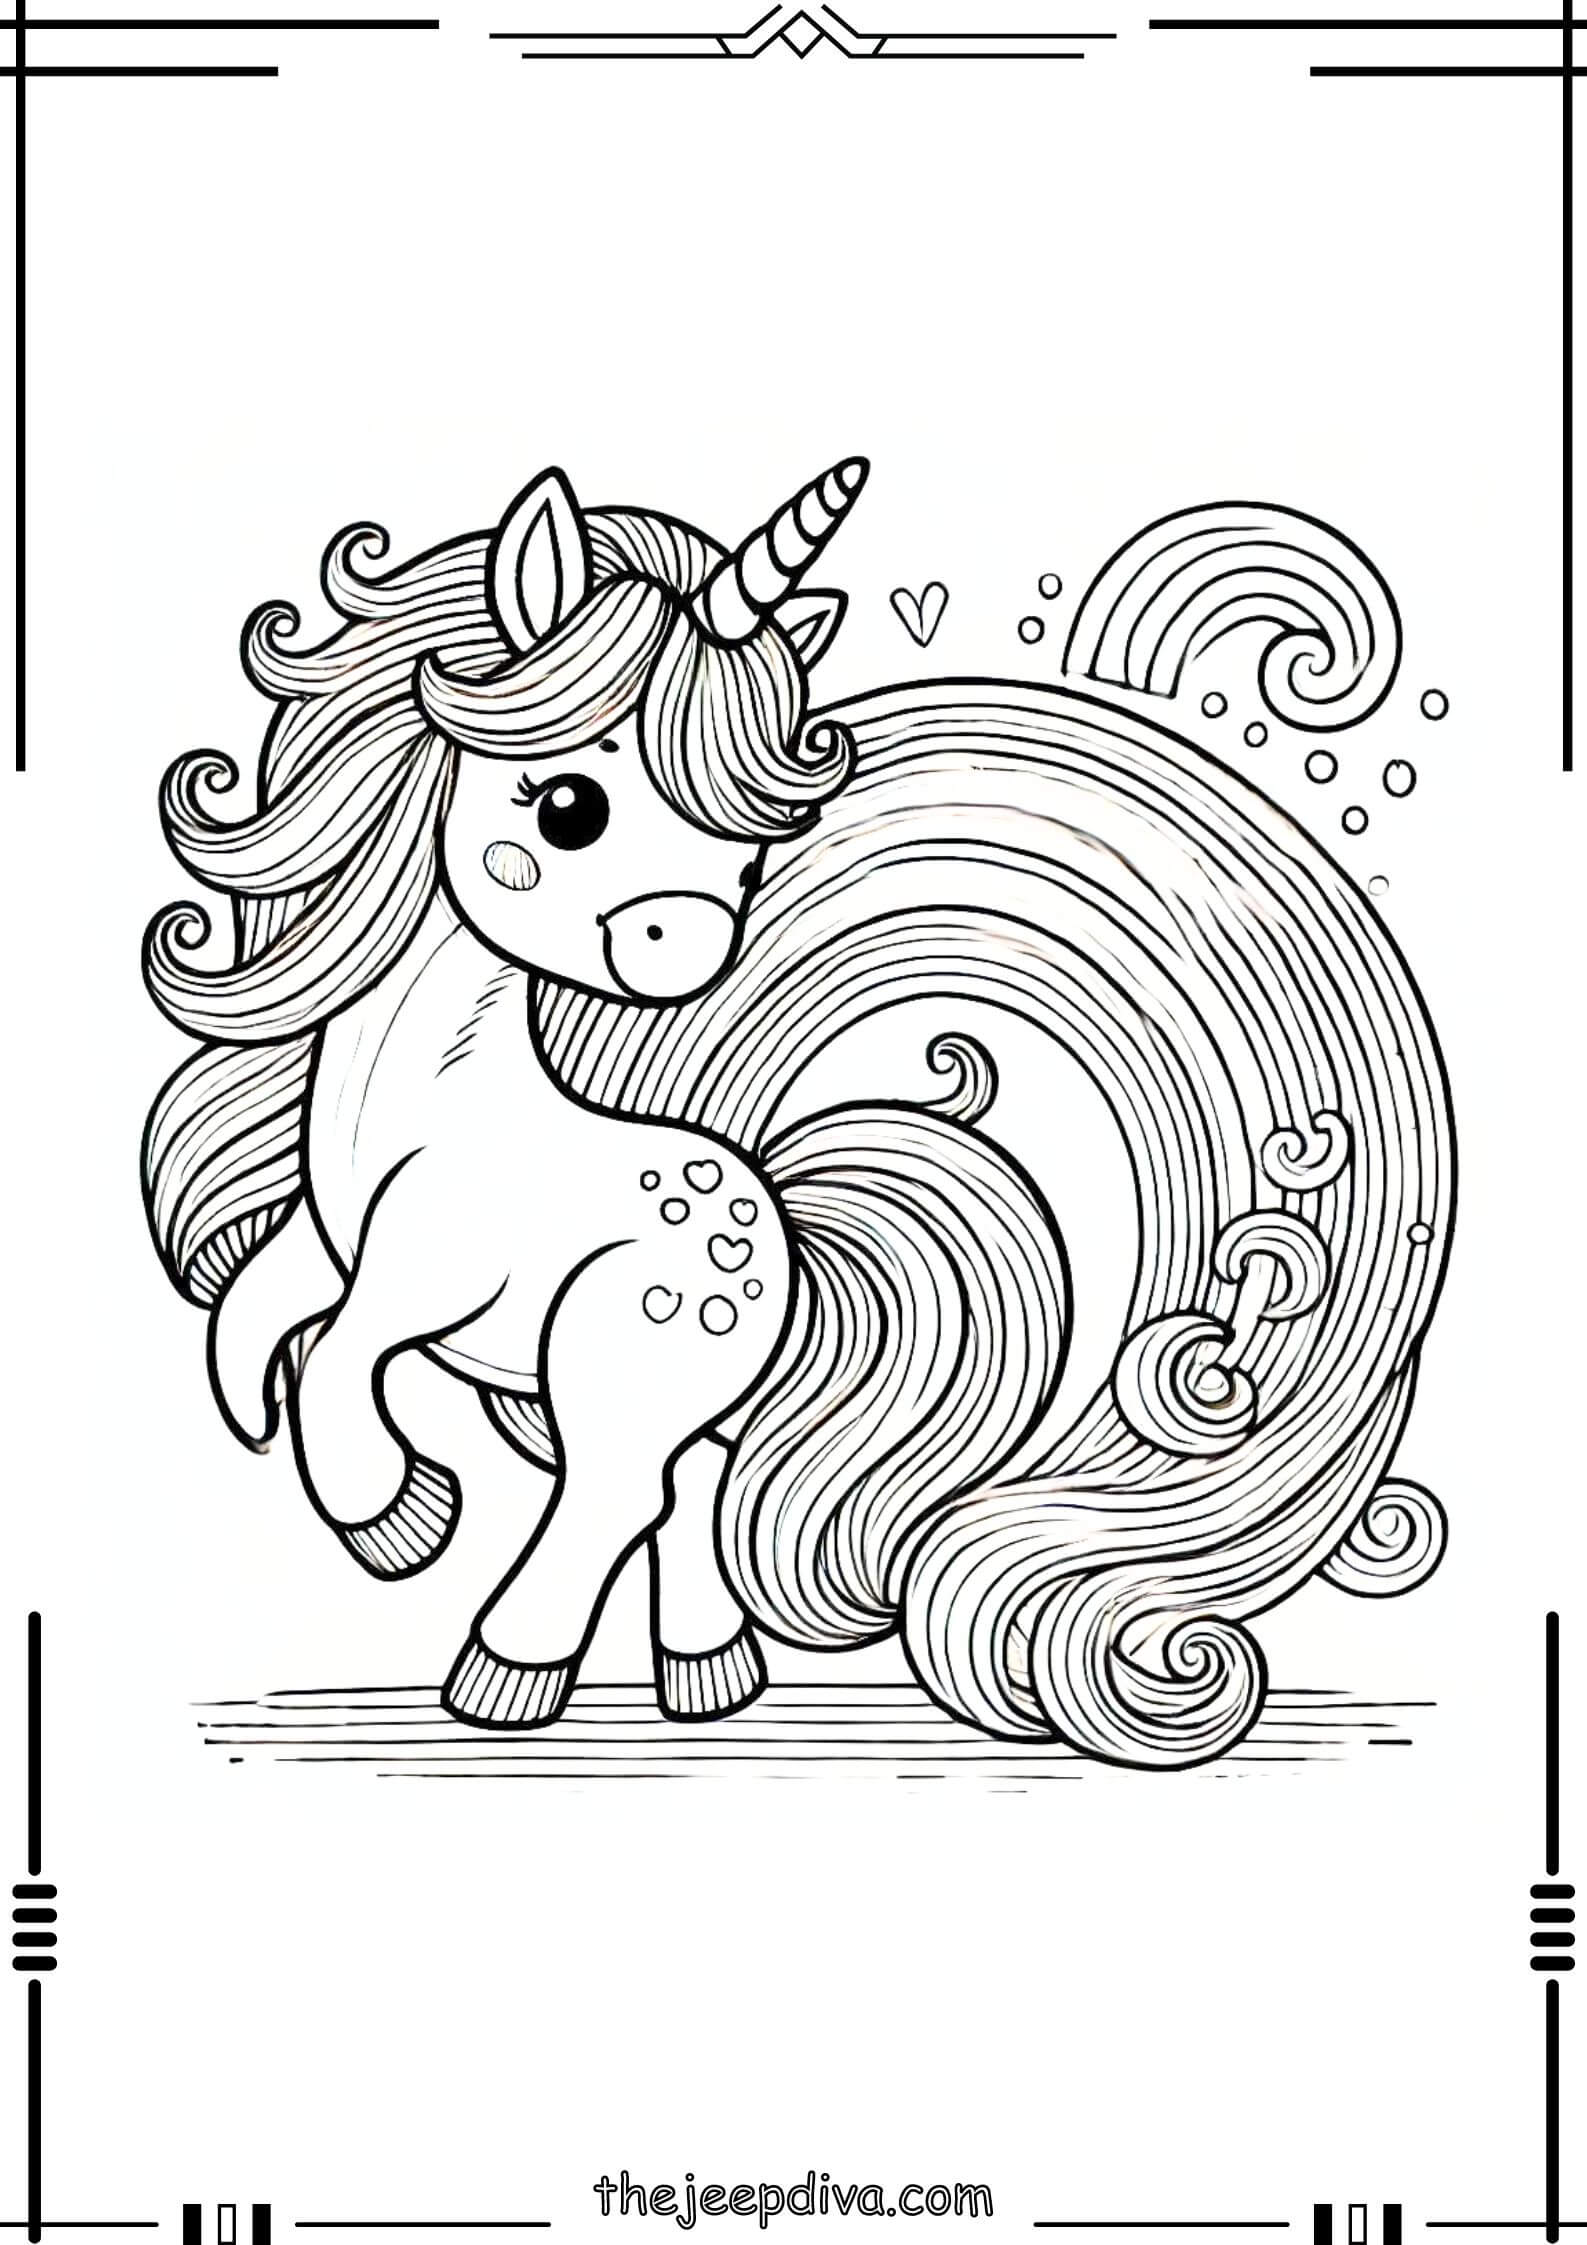 unicorn-coloring-page-hard-7